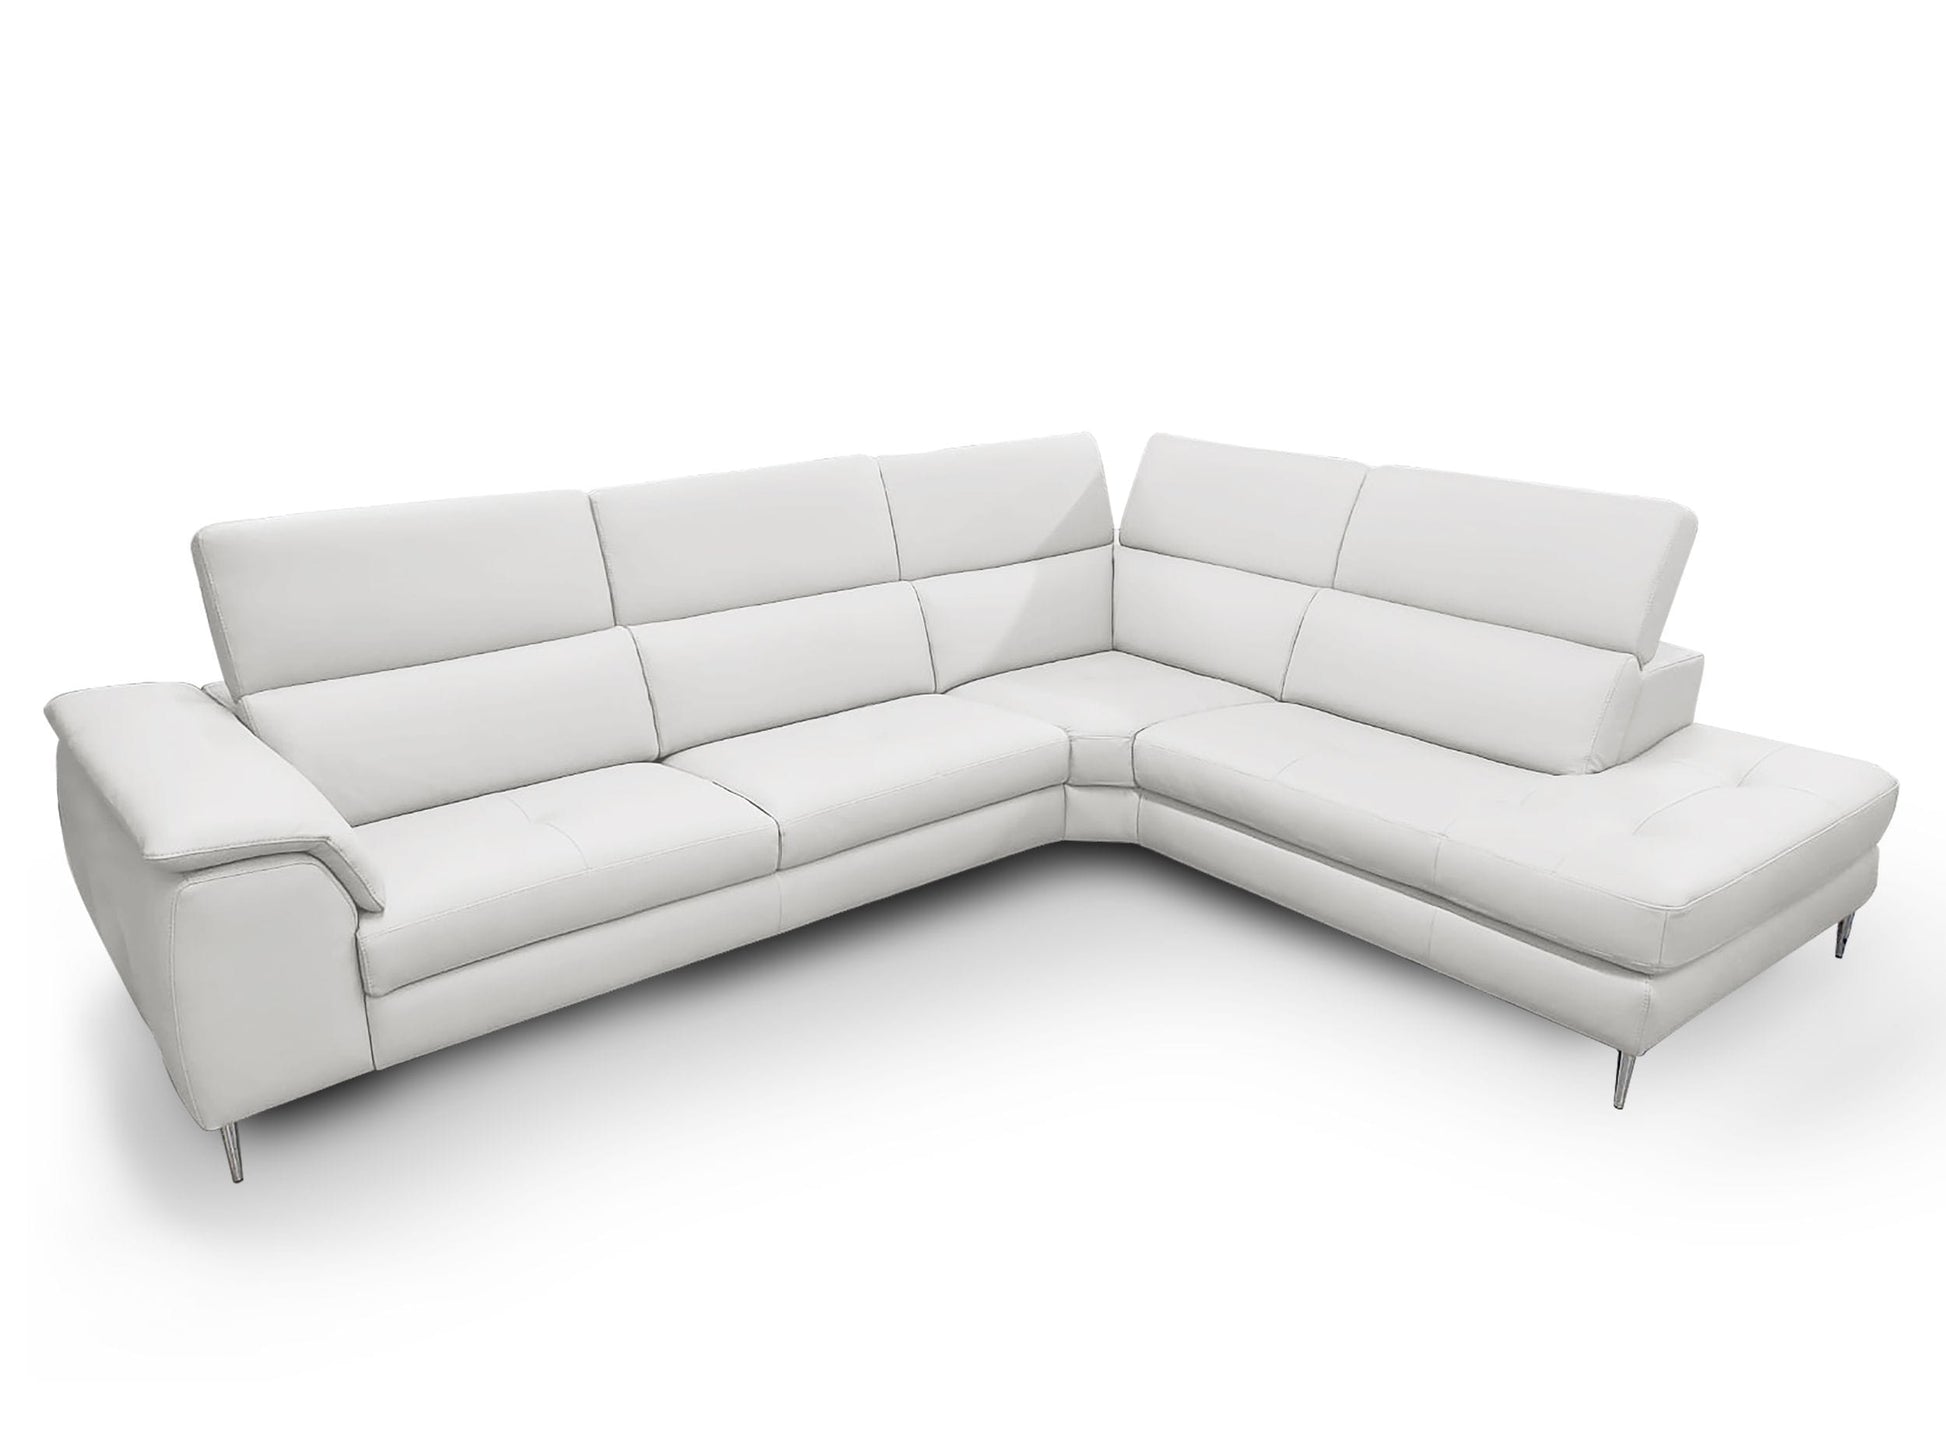 VIG Furniture Coronelli Viola Italian Grey Leather Right Sectional Sofa